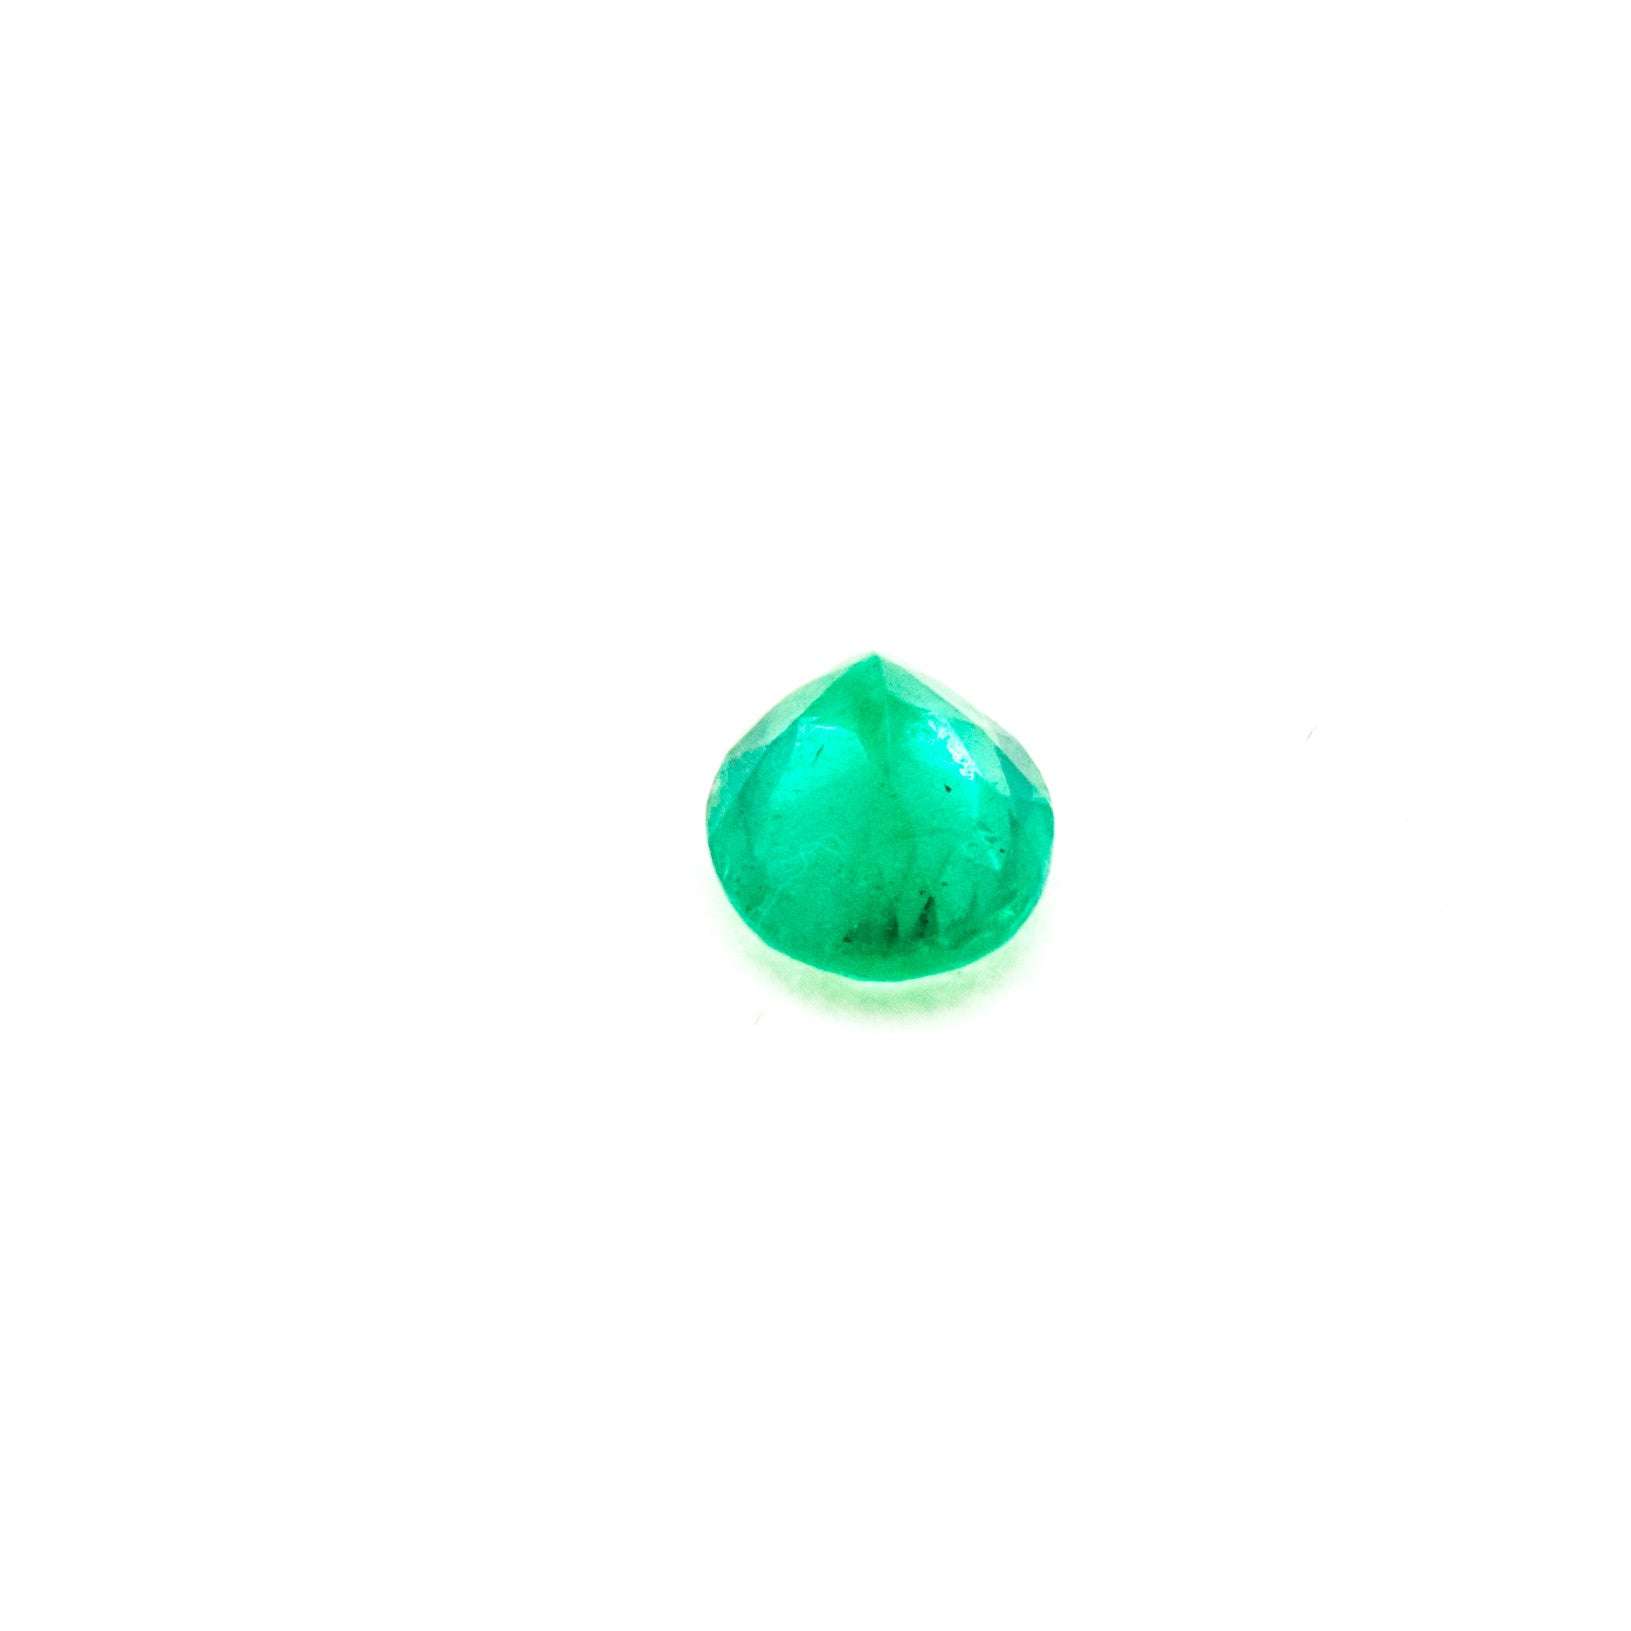 Emerald oval brilliant cut 0.97 carat loose gemstone - Make a custom order CLICK HERE - Sarah Hughes - 5